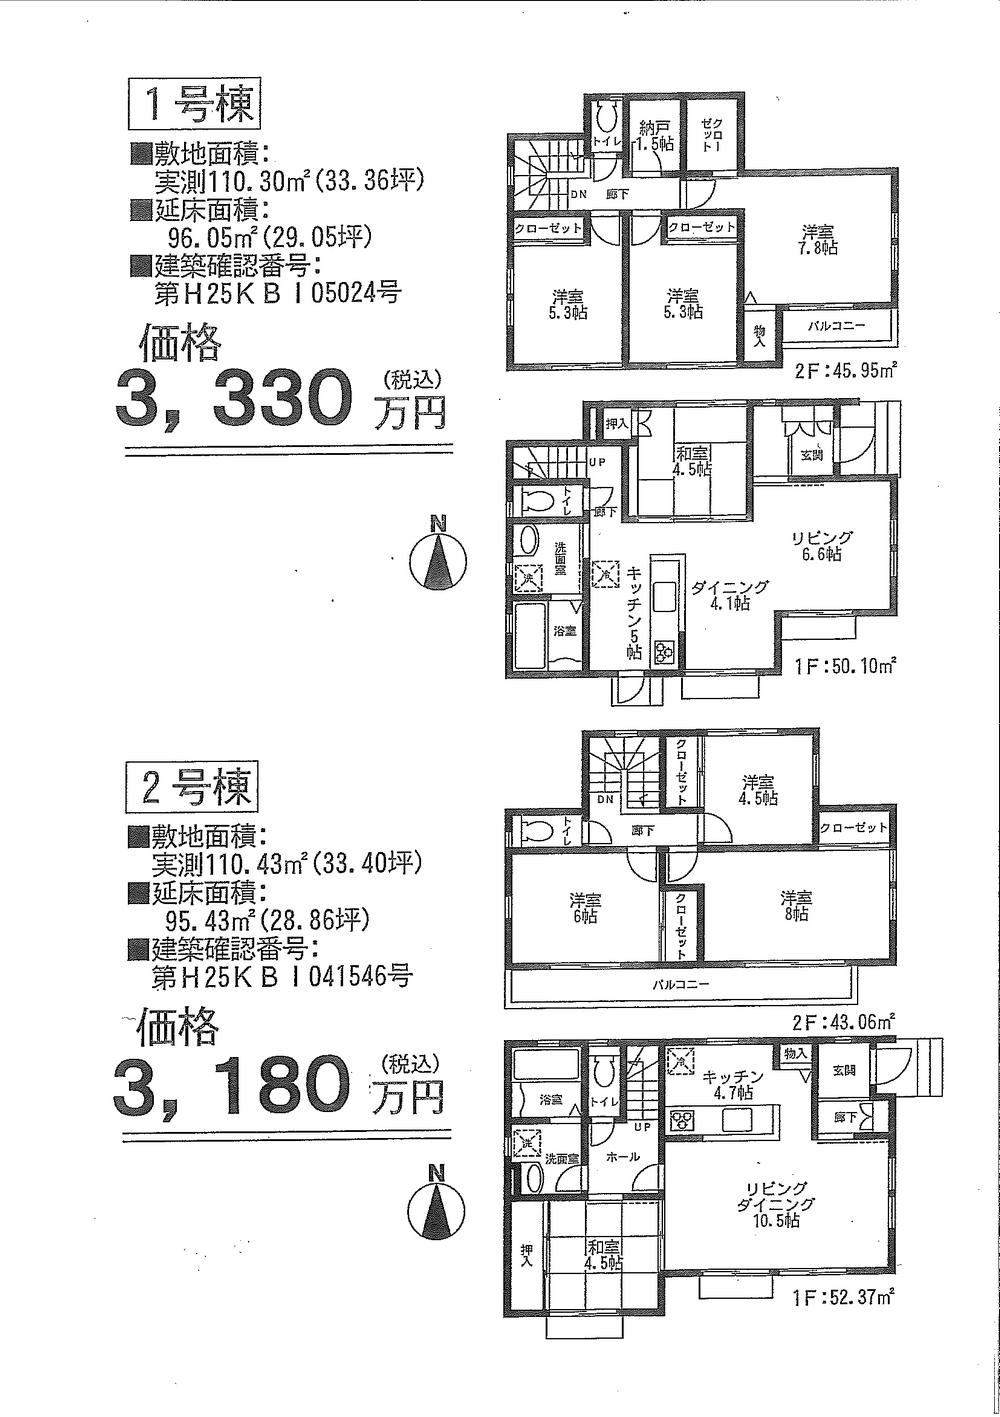 Floor plan. Price 31,800,000 yen, 4LDK, Land area 110.43 sq m , Building area 95.43 sq m